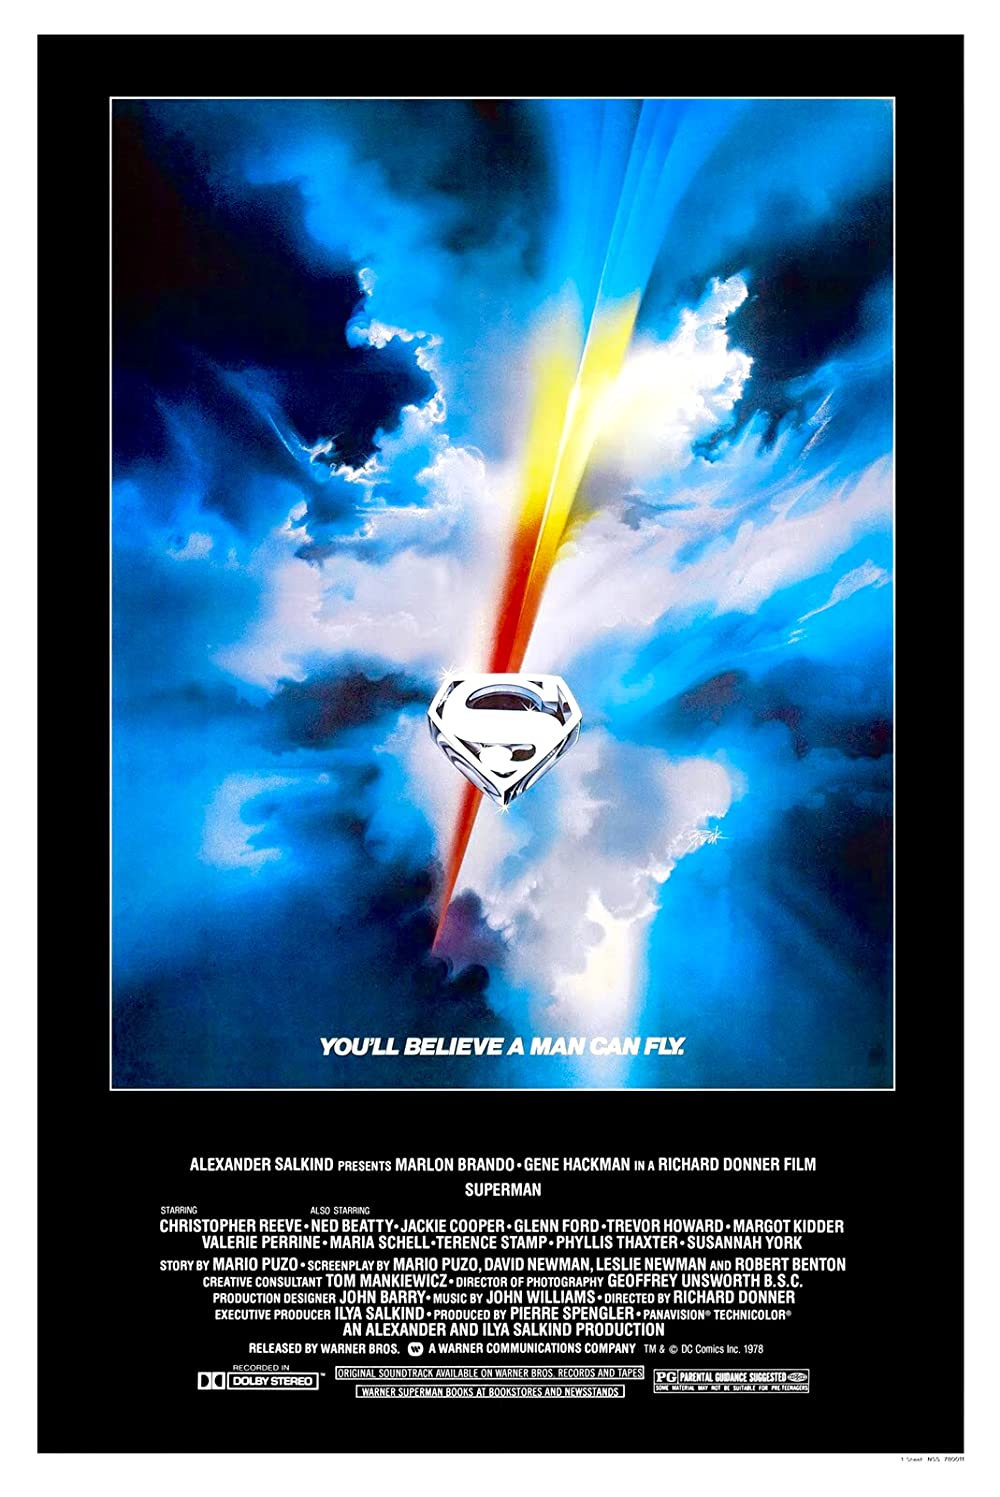 Superman (1978 film), Superhero Films Wiki